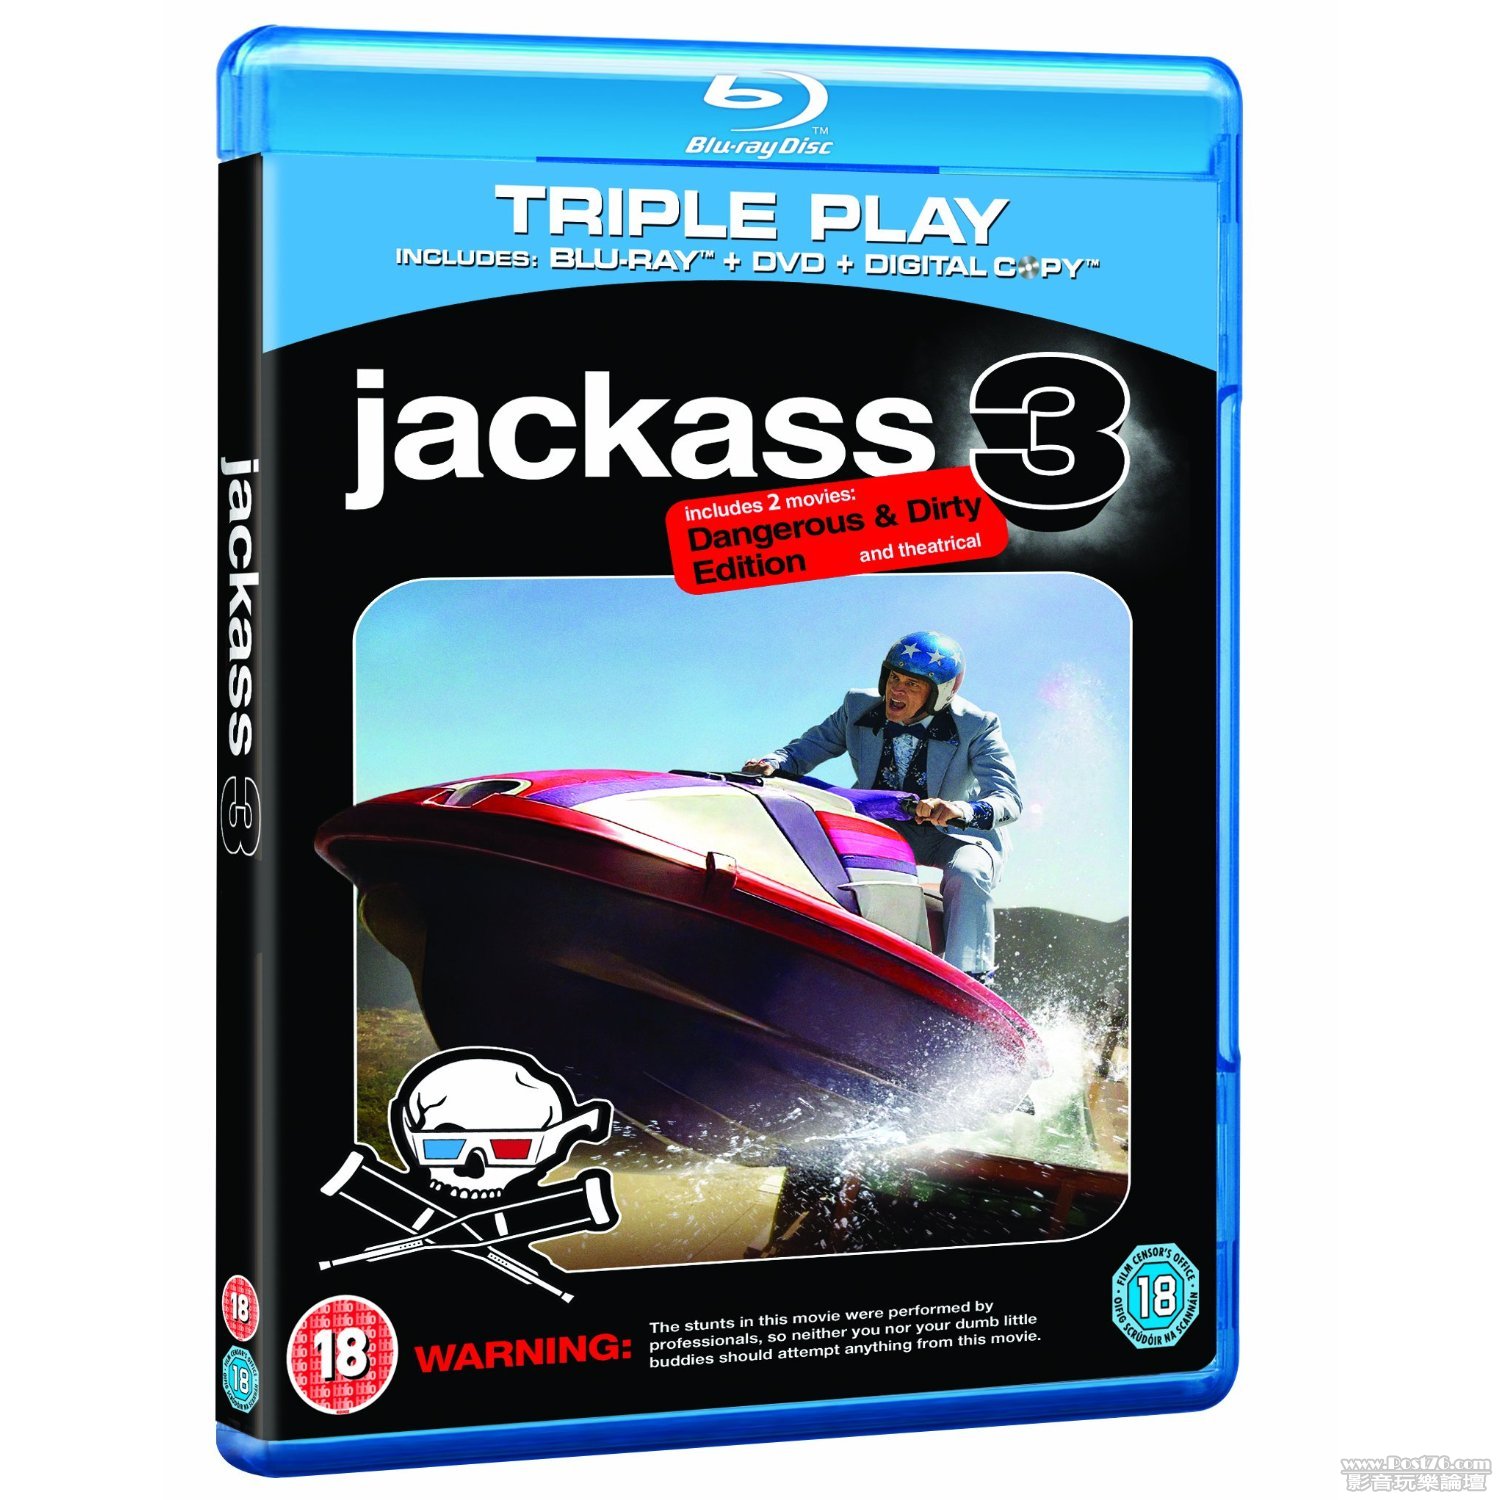 Jackass 3 BD UK.jpg